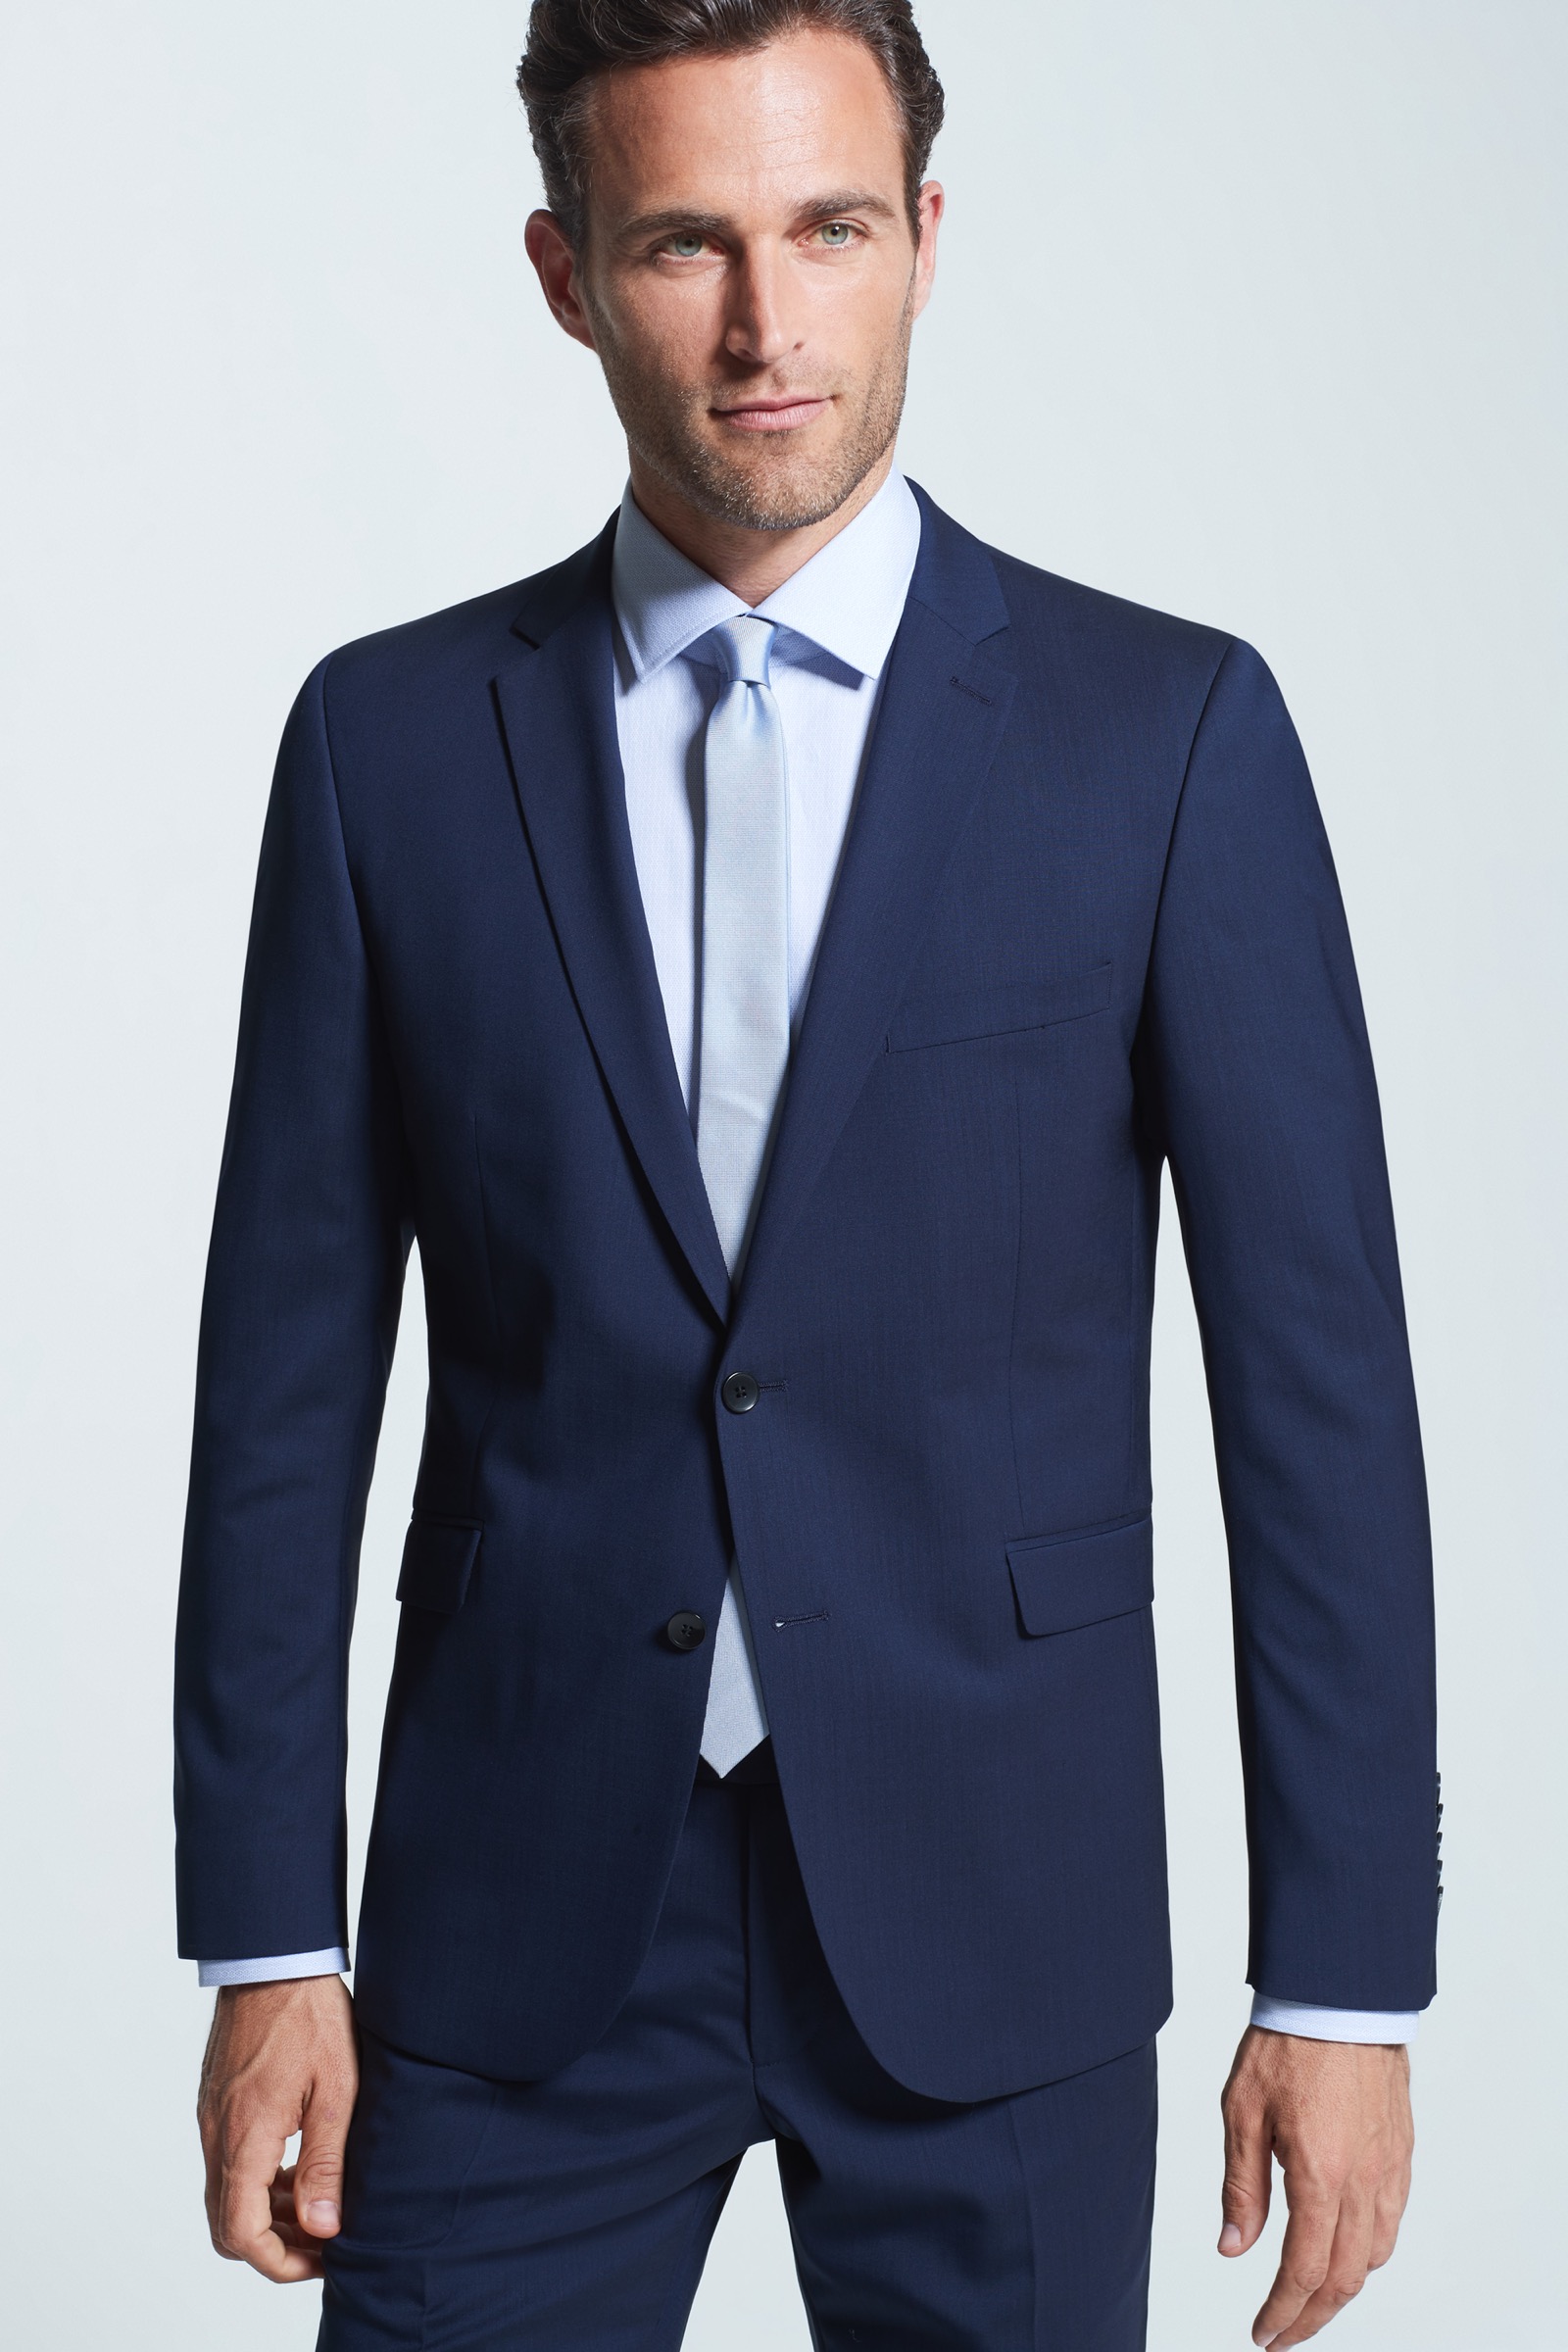 Blau 412 58 Taille Fabricant: 56 Marque : Strellson PremiumStrellson Premium Allen Veste De Costume Bleu Homme 